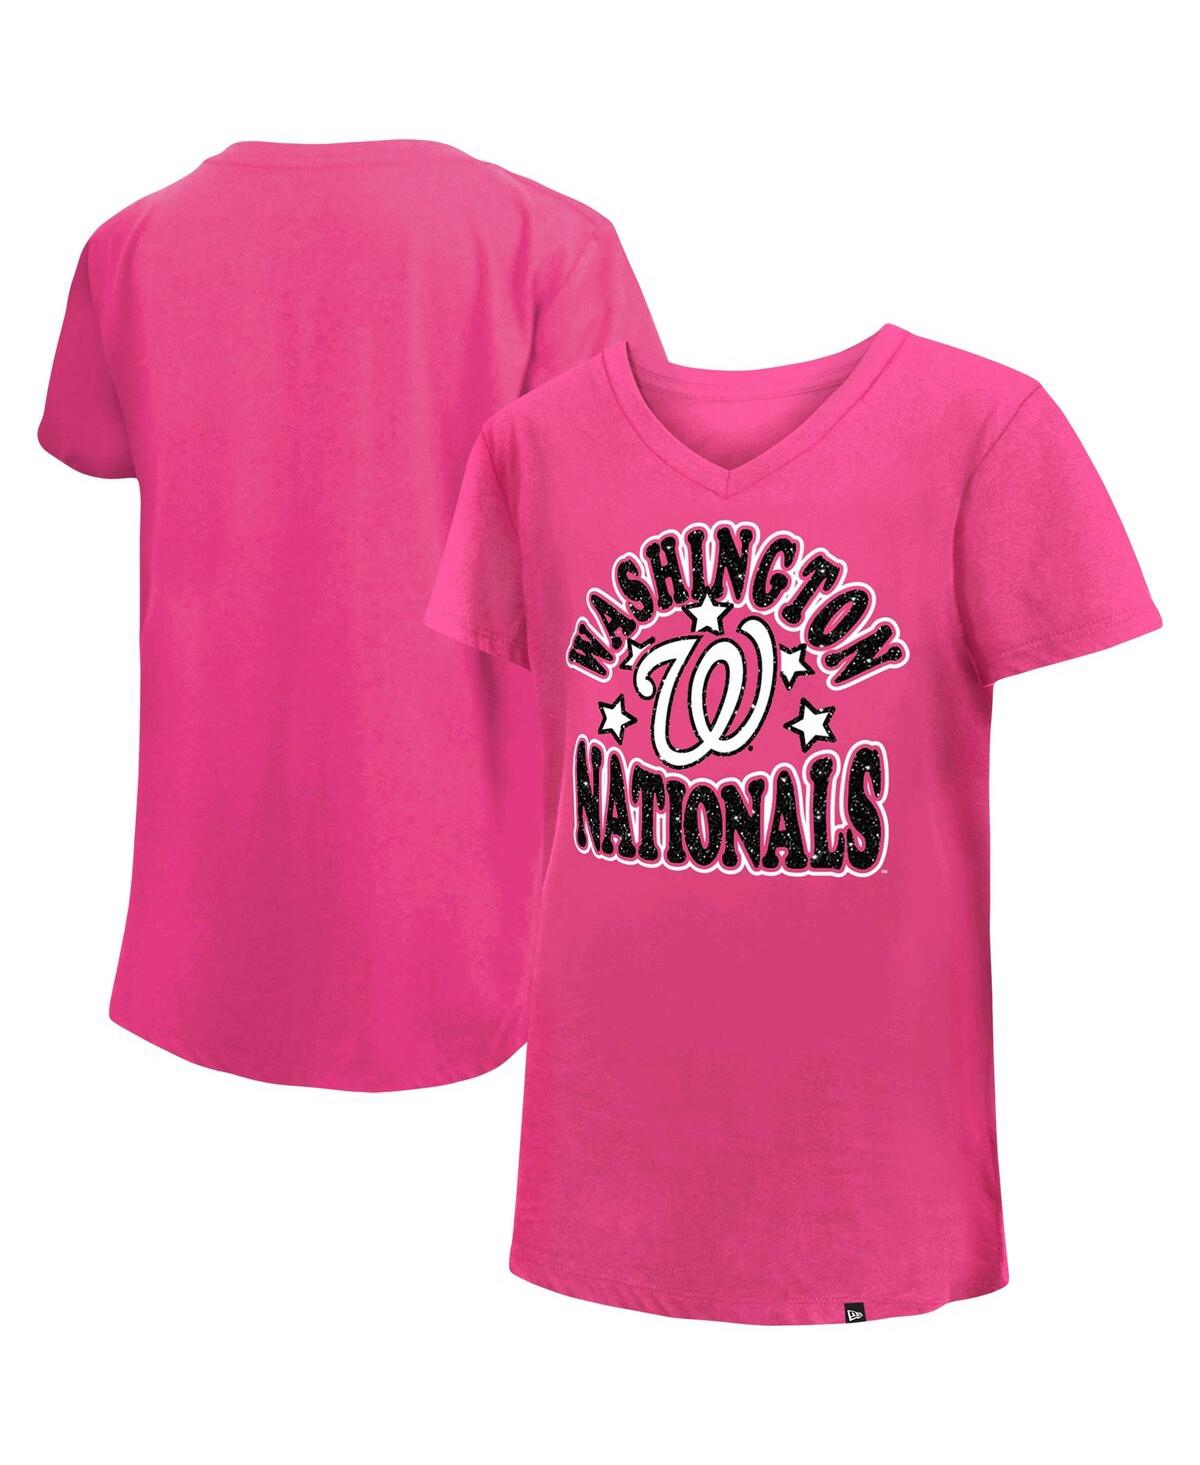 Washington Nationals kids jerseys